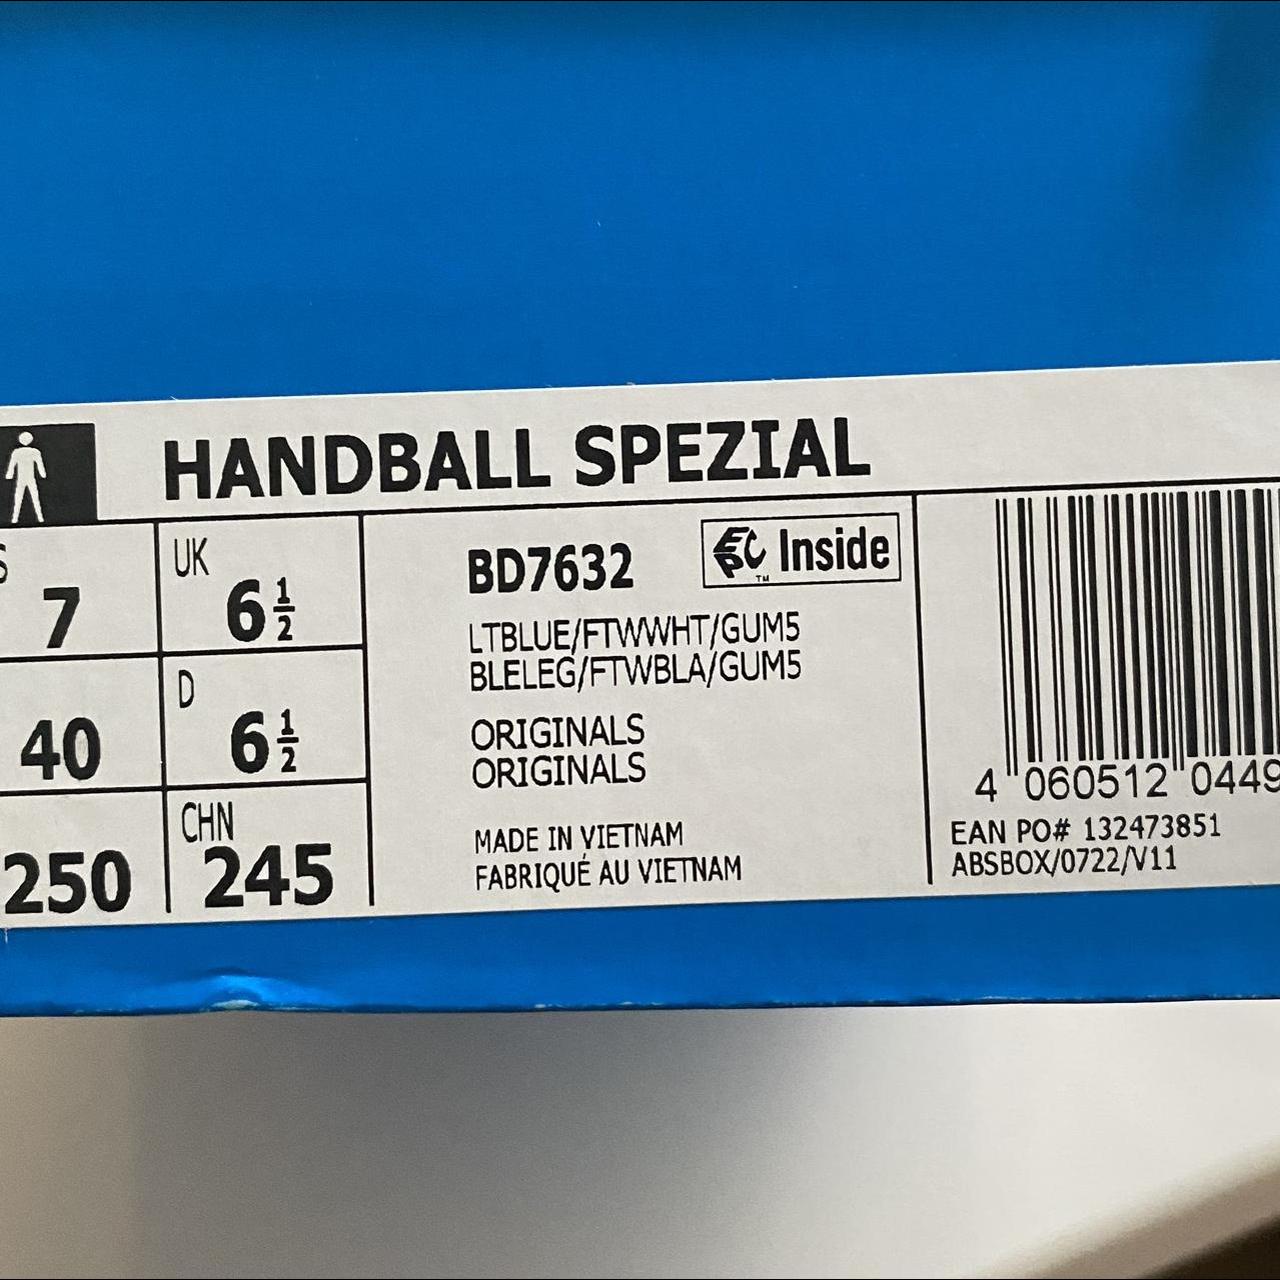 Adidas HANDBALL SPEZIAL Blue - LTBLUE/FTWWHT/GUM5